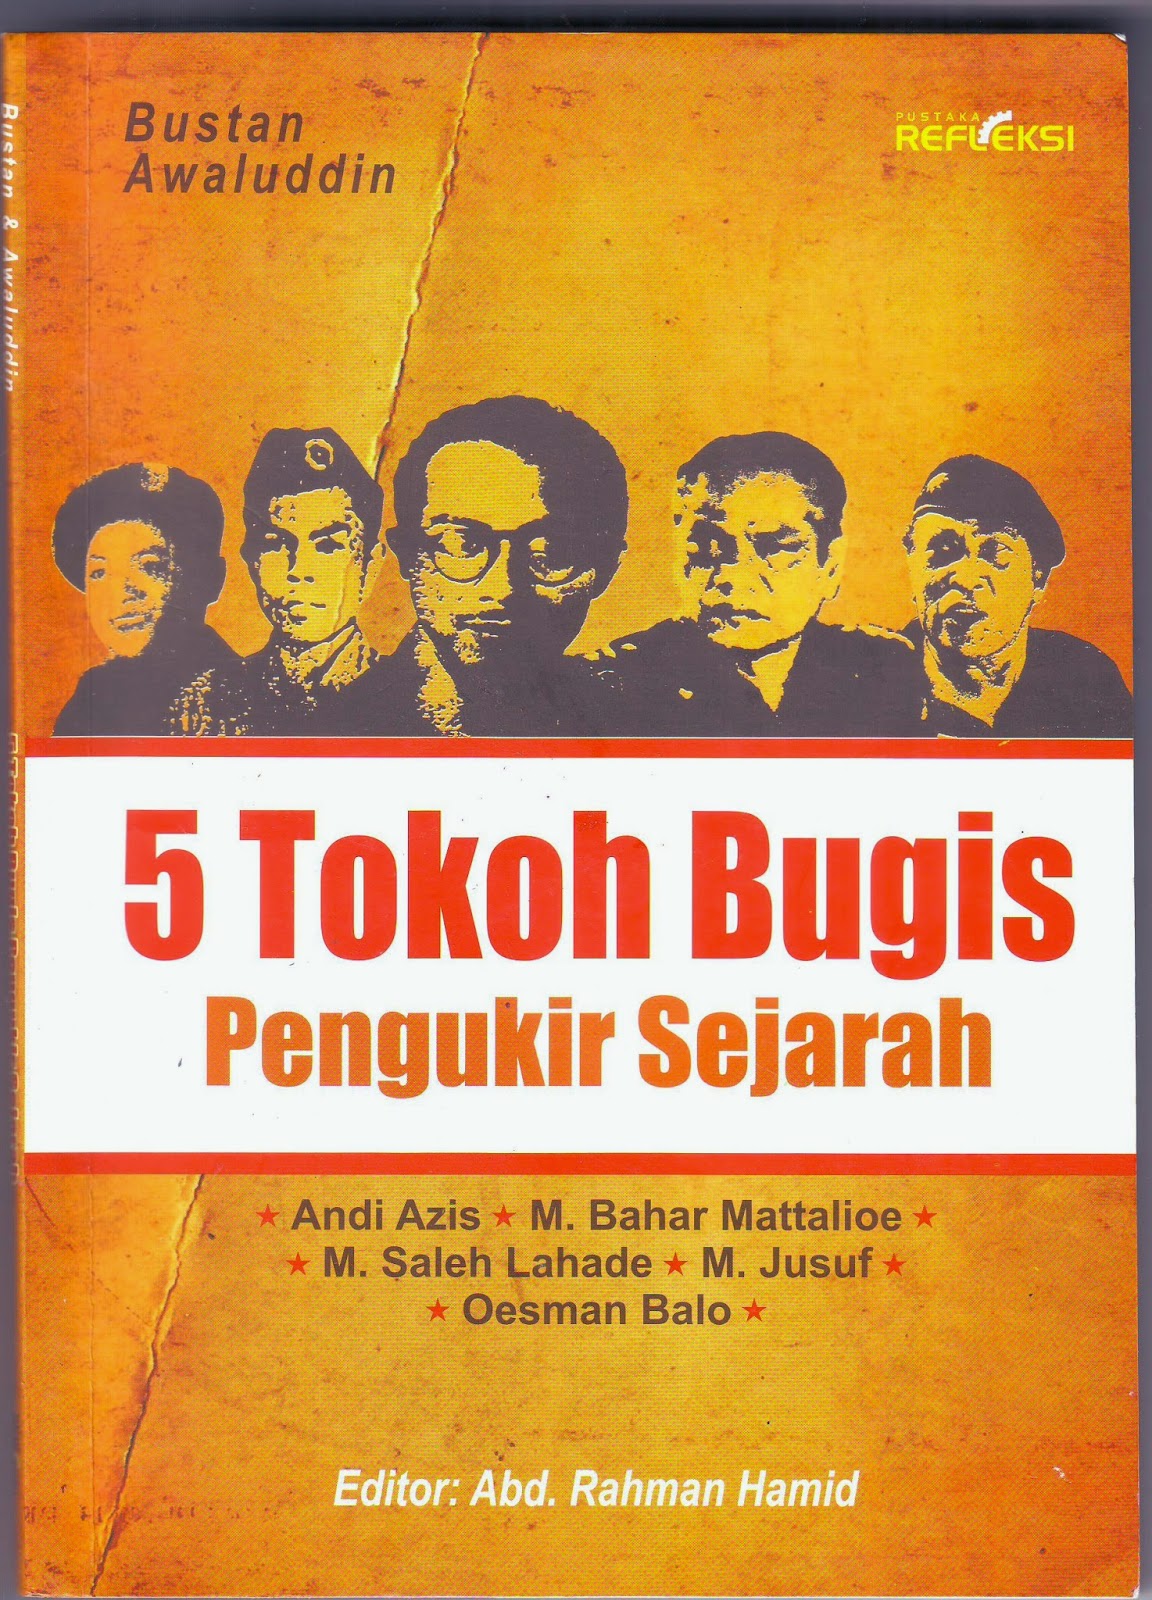 Lima tokoh Bugis pengukir sejarah : M. Bahar Mattalioe, M. Saleh Lahade, M. Jusuf, Oesman Balo, Andi Azis